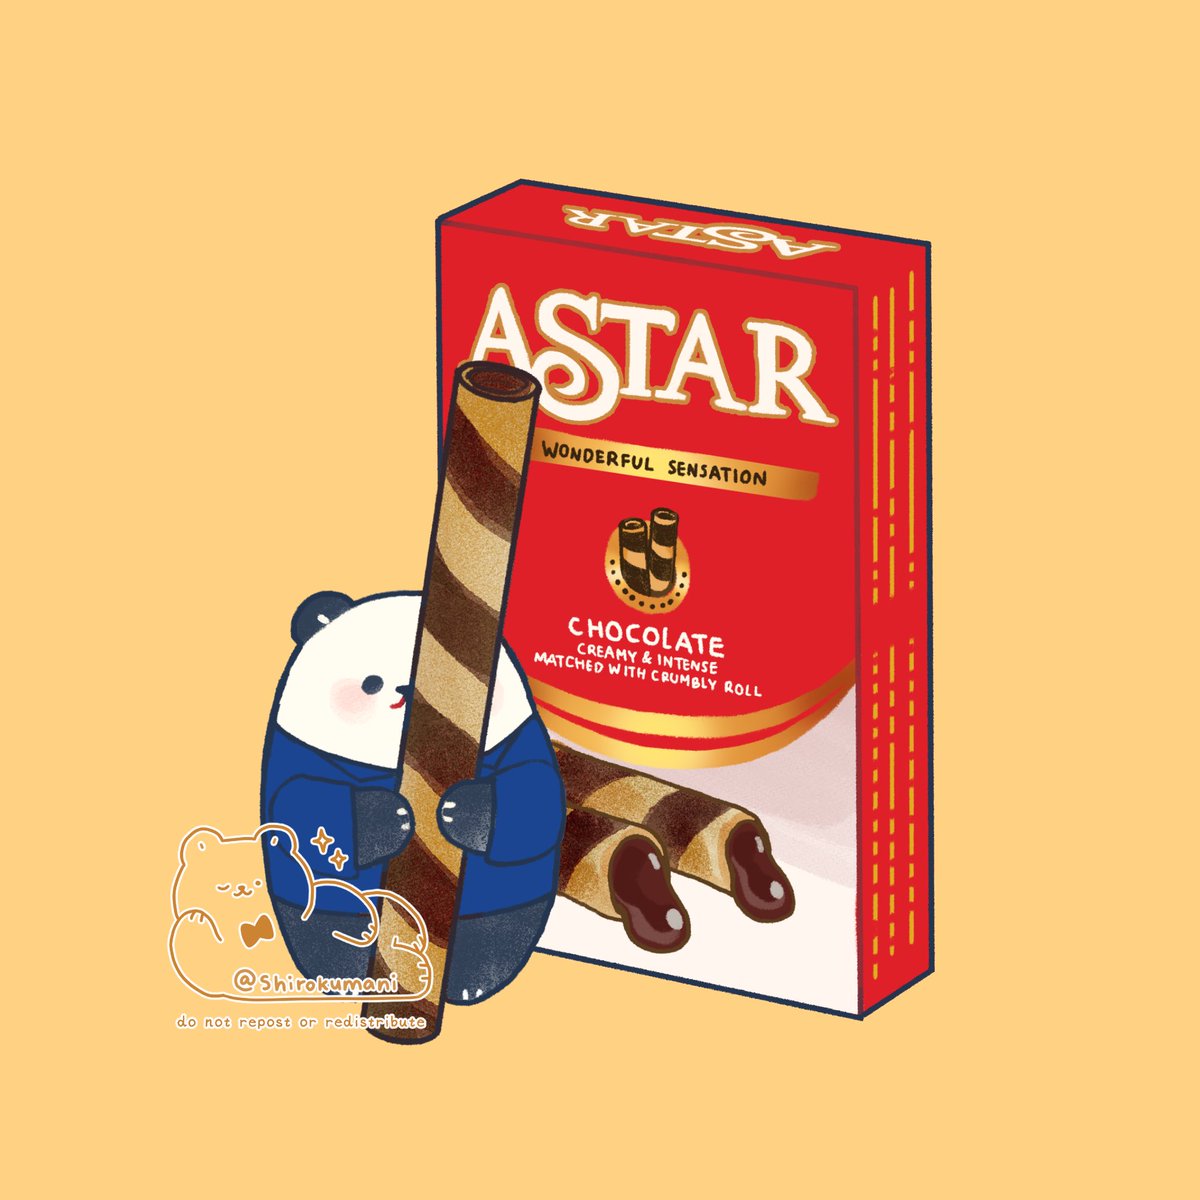 「Day 26: Astar! I looooove this snack #oc」|mani 🧸 COMM OTWのイラスト